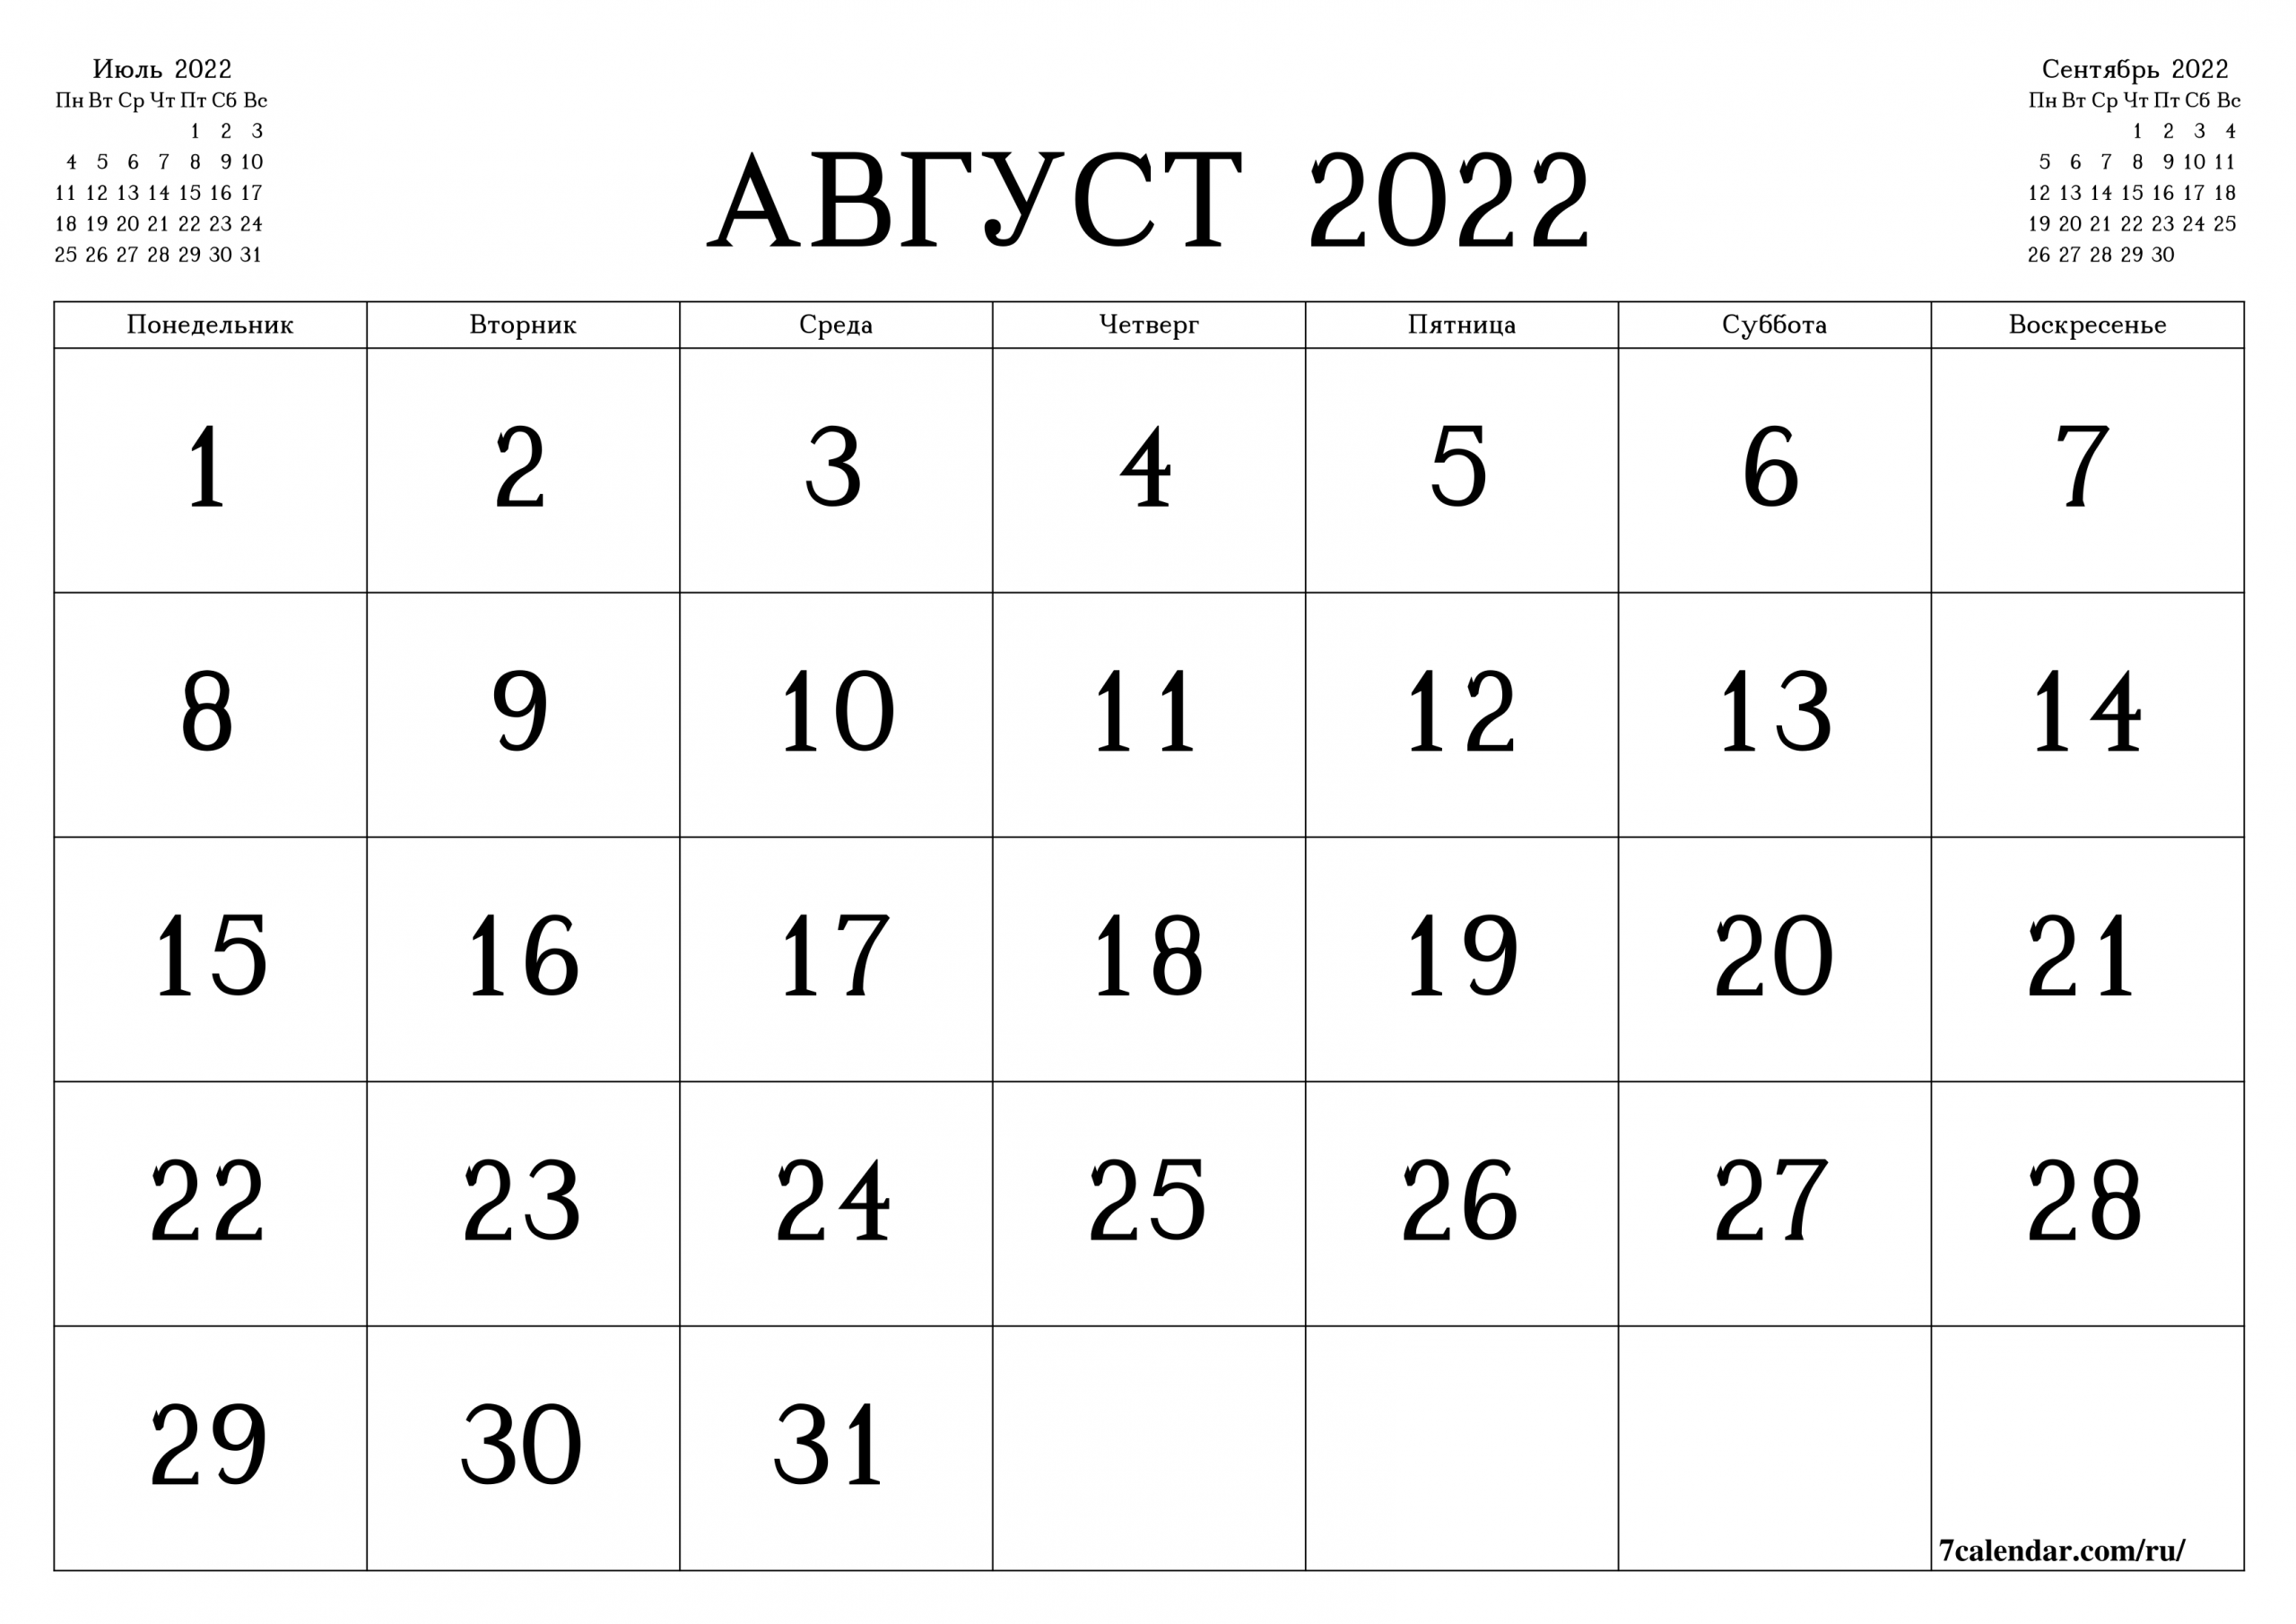 Hamilton City Schools Calendar 2021 2022 | Calendar 2021